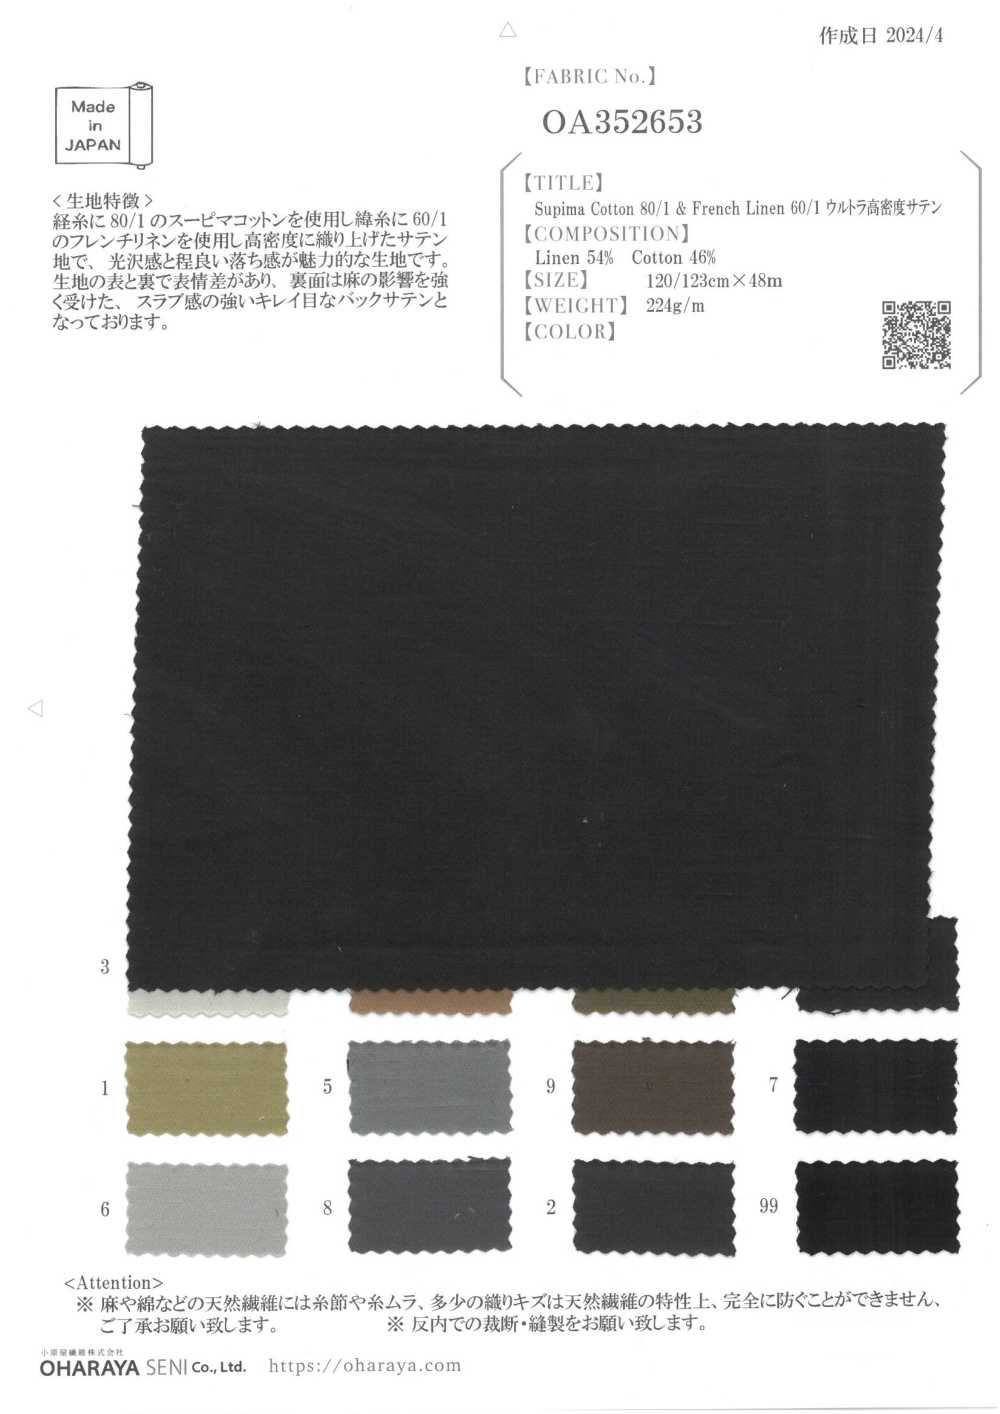 OA352653 Supima Cotton 80/1 & French Linen 60/1 Ultra Dense Satin[Textile / Fabric] Oharayaseni